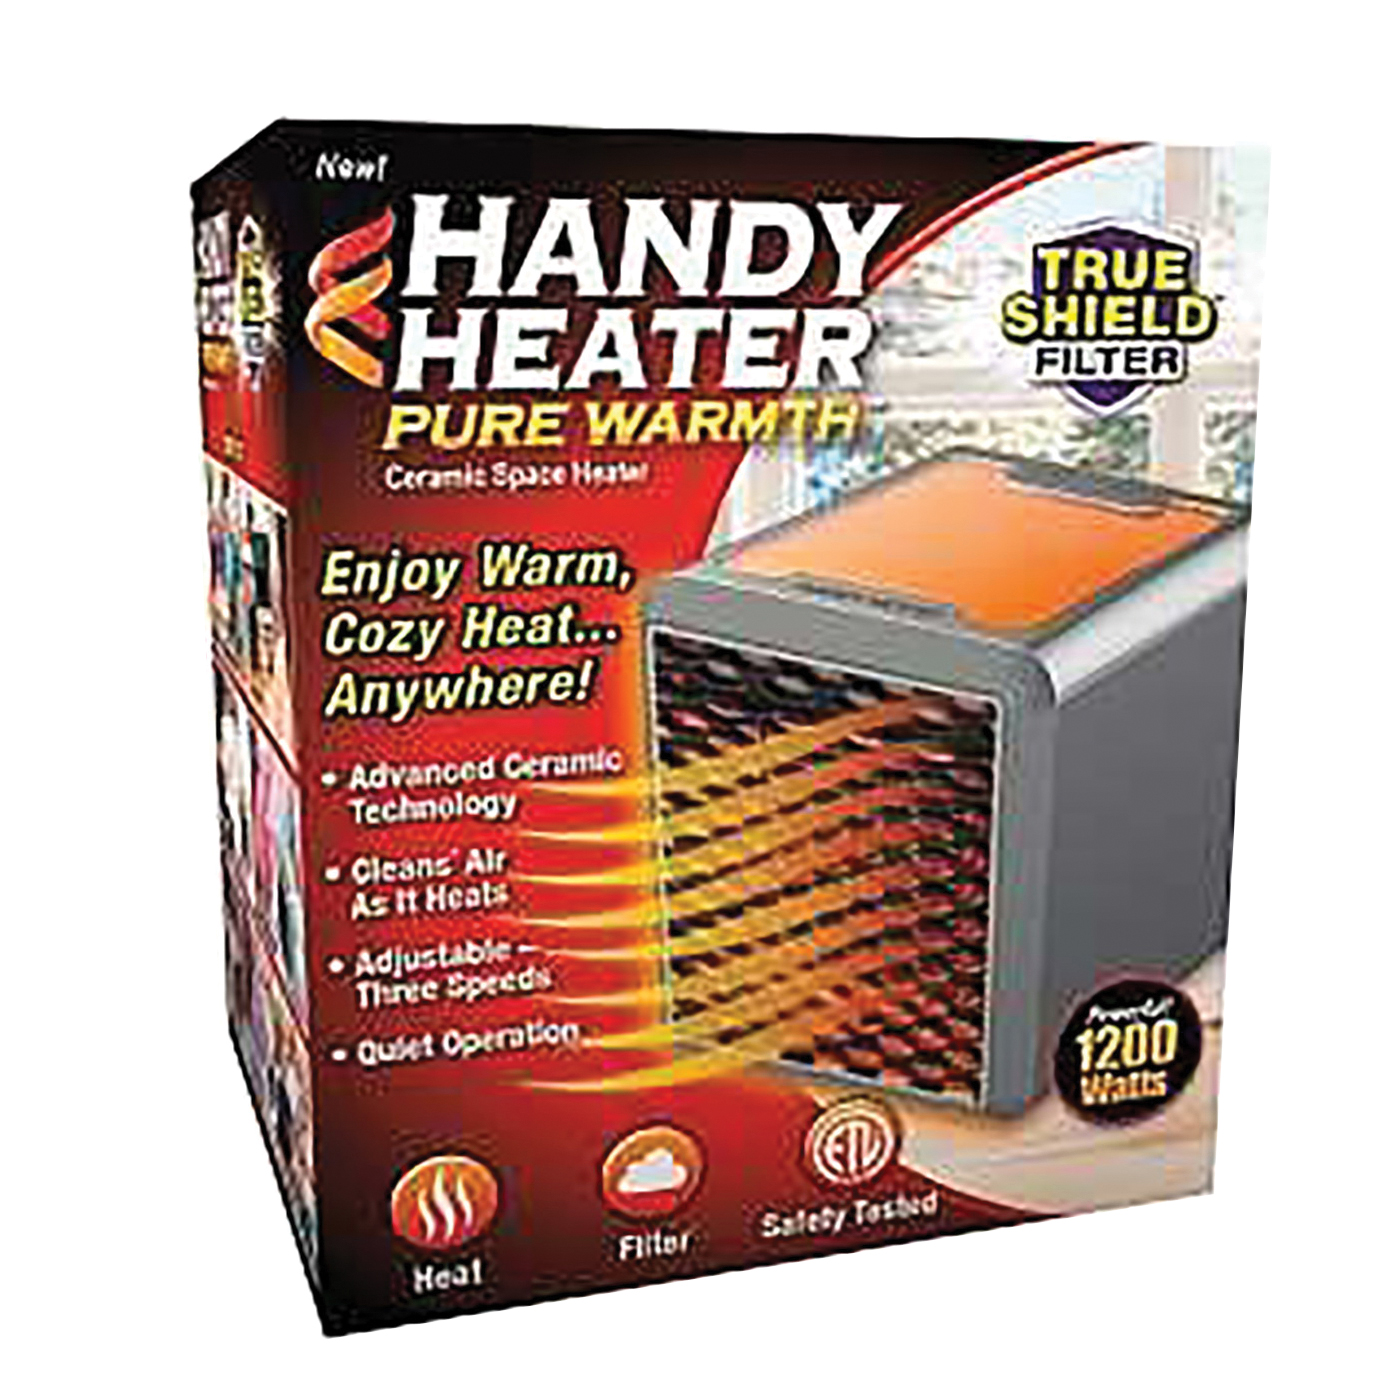 Handy Heater Pure Warmth Series HEATPW-MC4 Portable Space Heater, 1200 W, 3-Heat Setting - 1